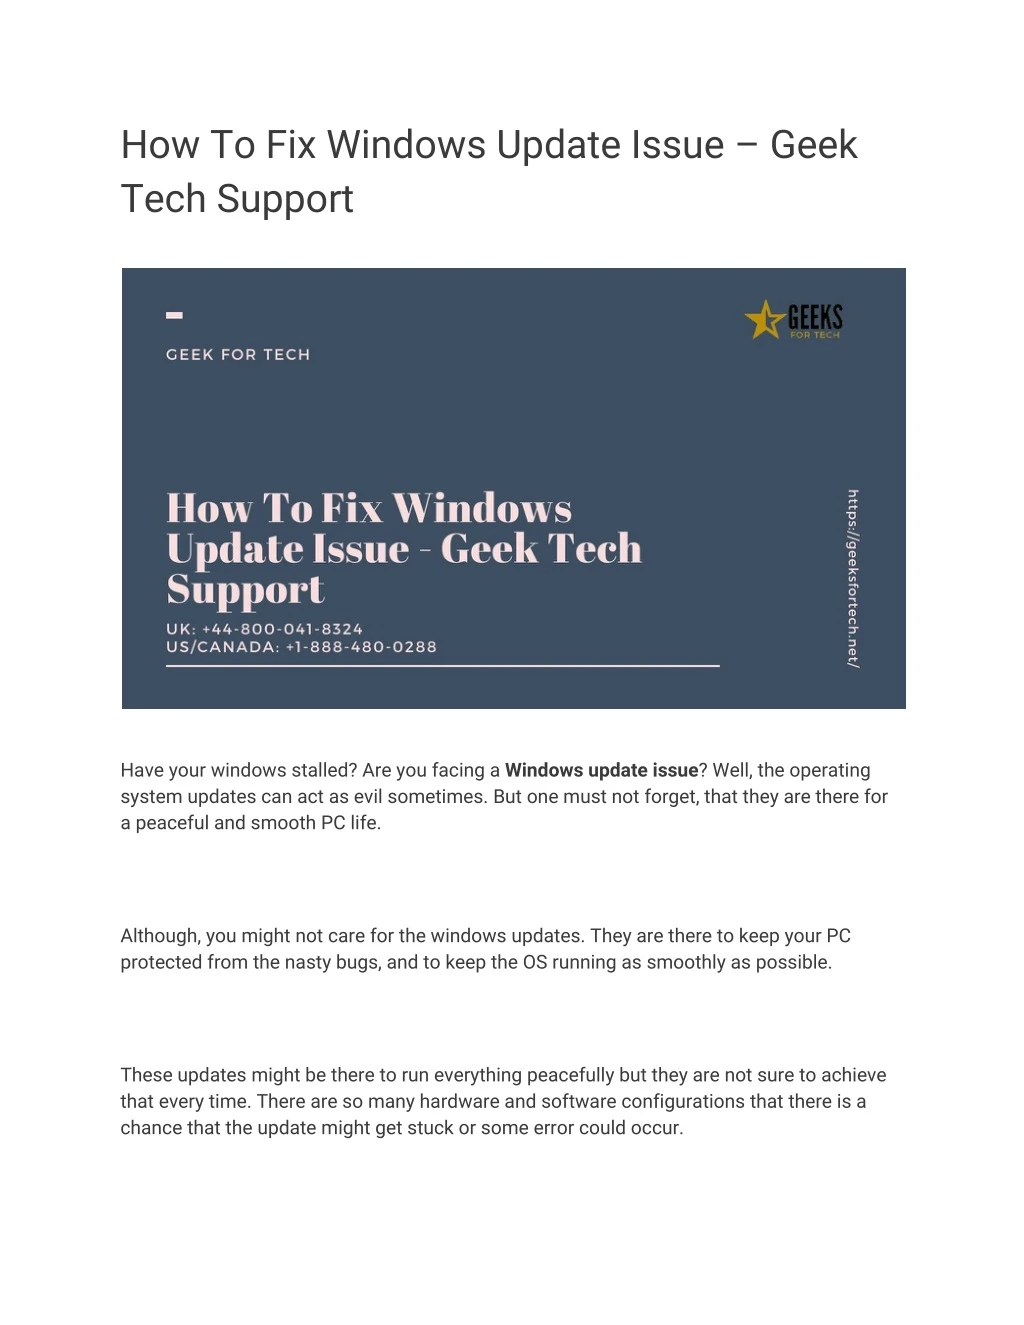 how to fix windows update issue geek tech support